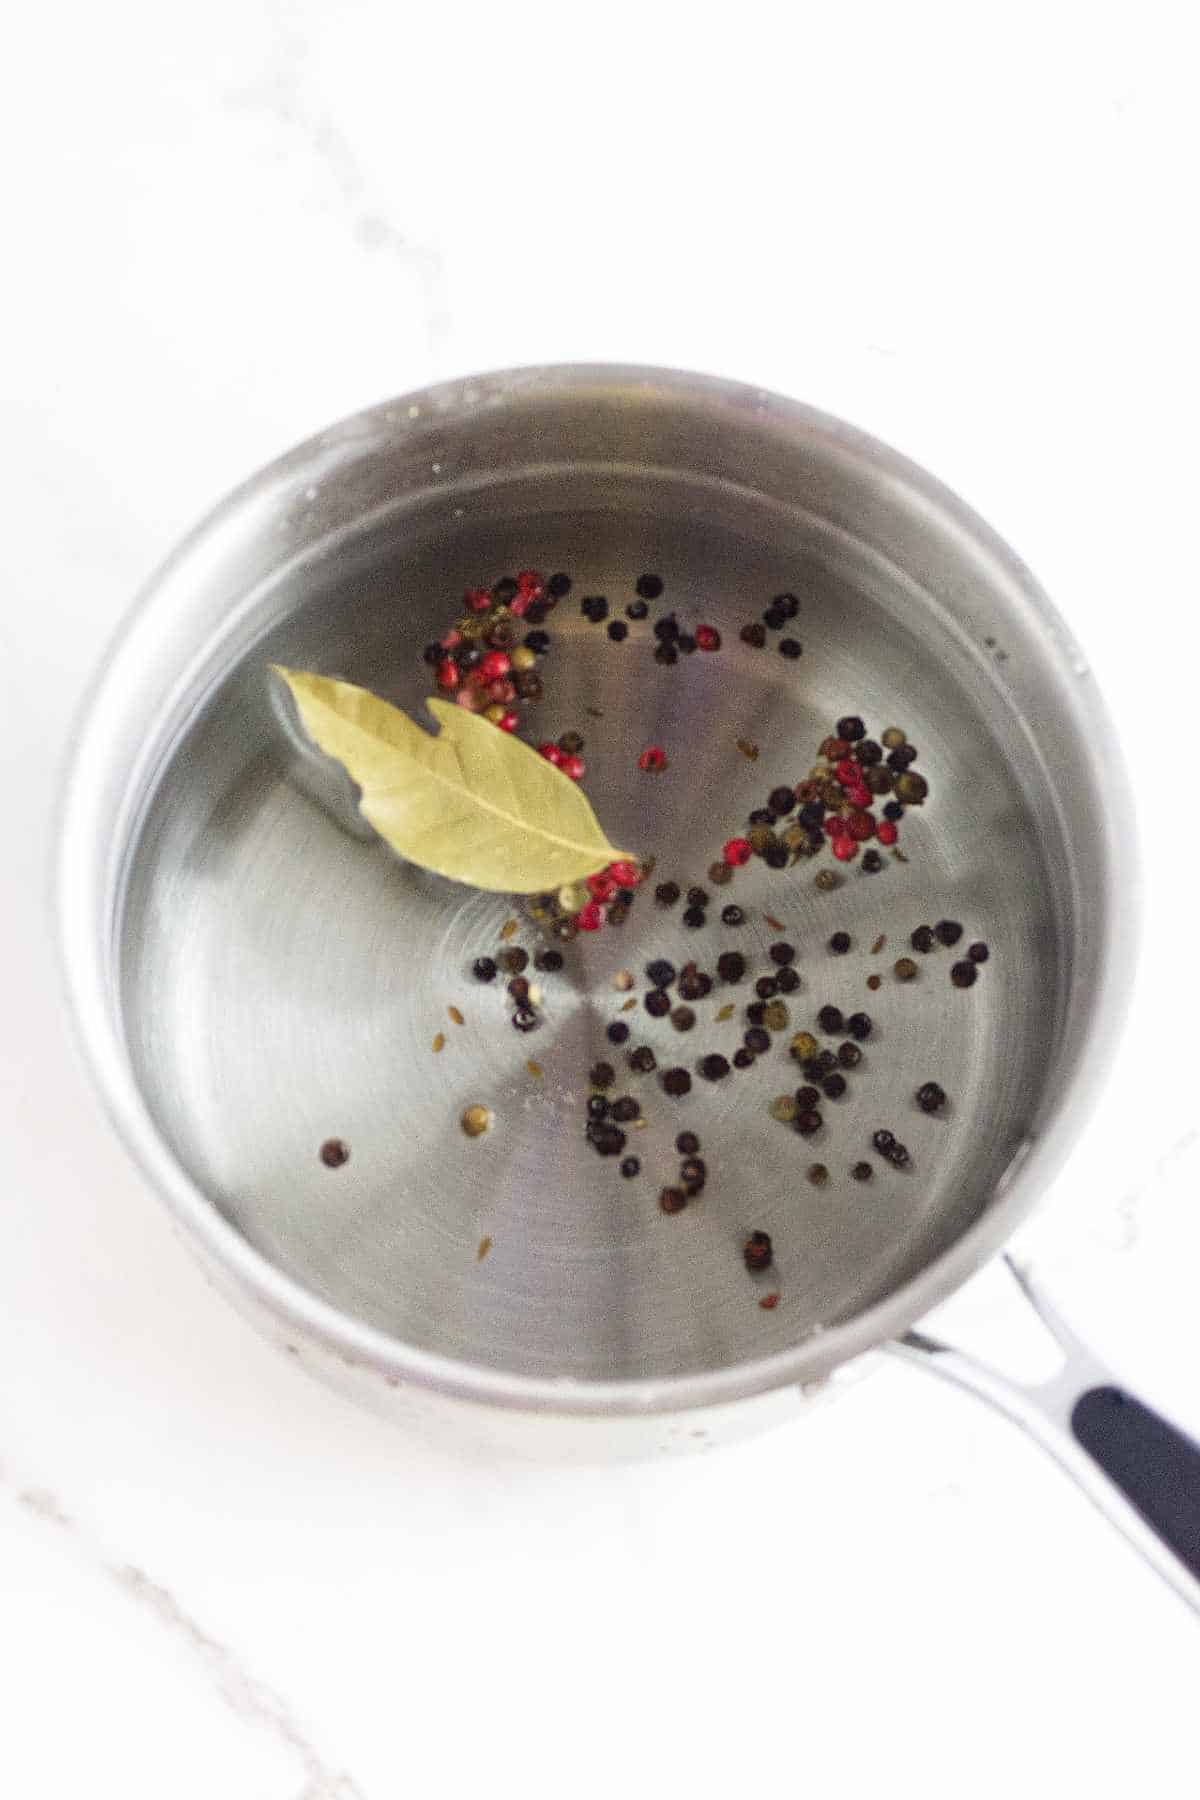 pickling brine in a sauce pan.